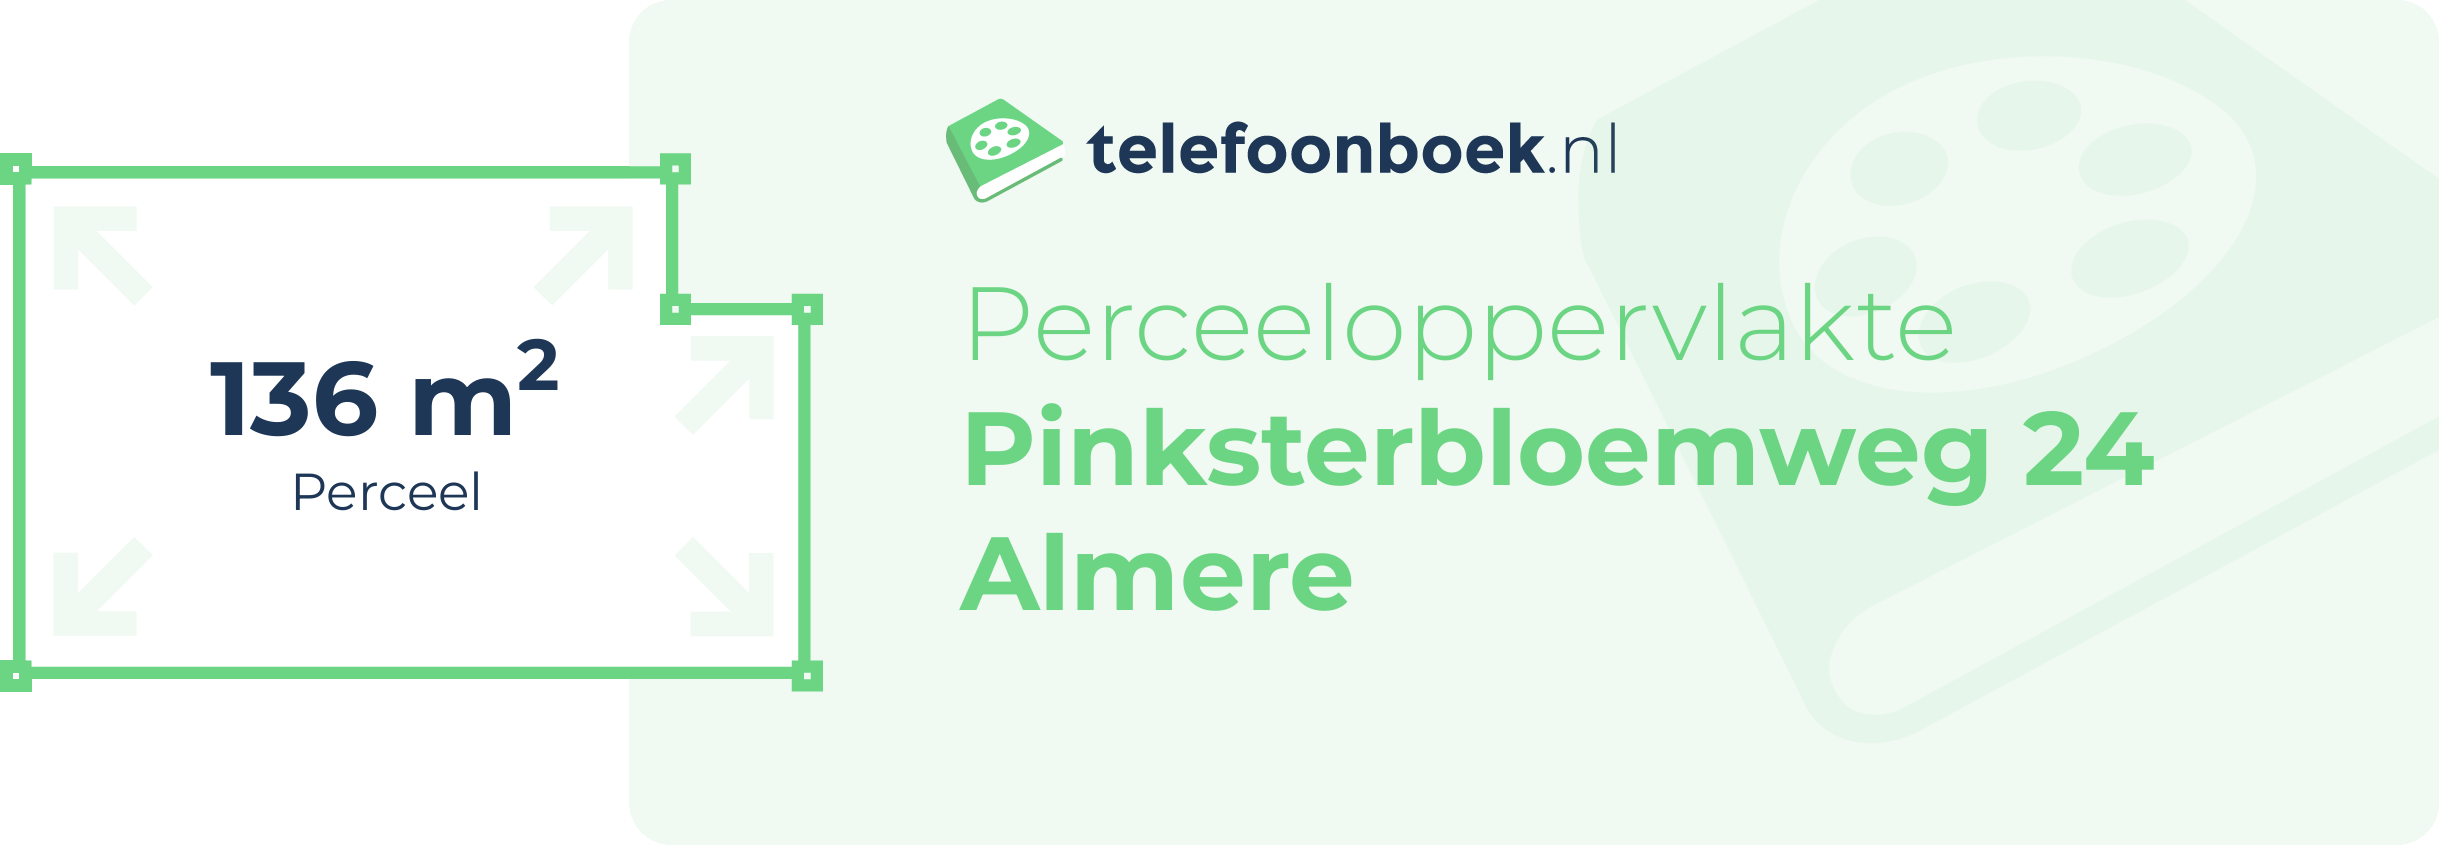 Perceeloppervlakte Pinksterbloemweg 24 Almere